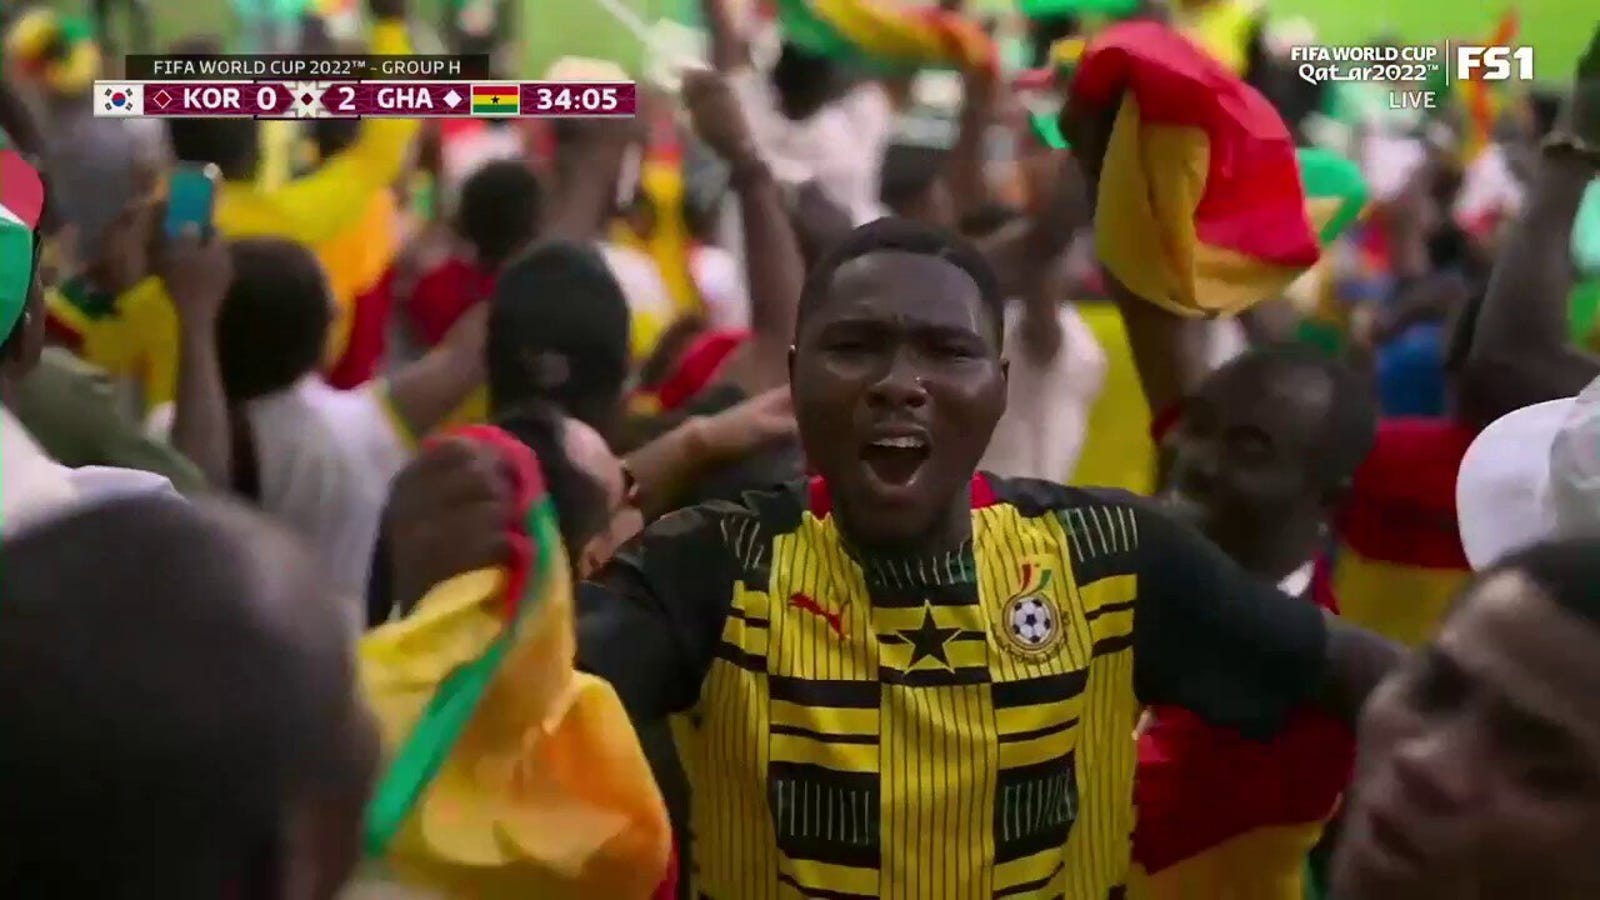 Ghana's Mohammed Kudus scores goal vs. Republic of Korea in 34' | 2022 FIFA World Cup